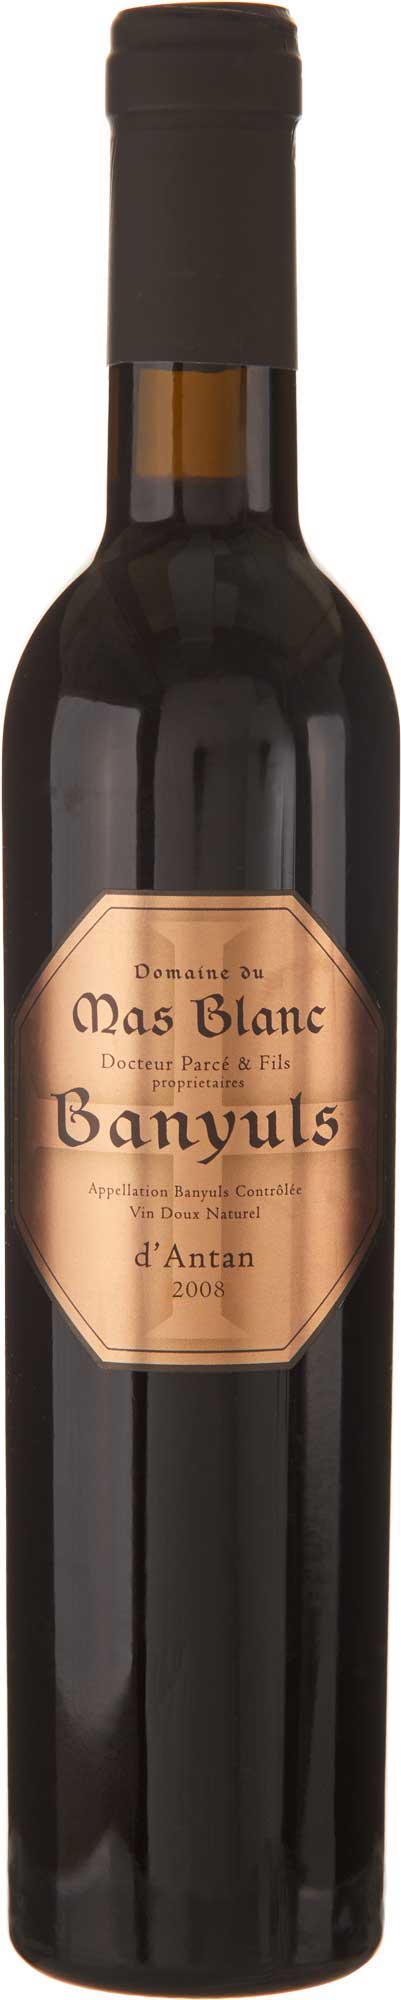 Domaine du Mas Blanc - Banyuls d'Antan 2006 (375)